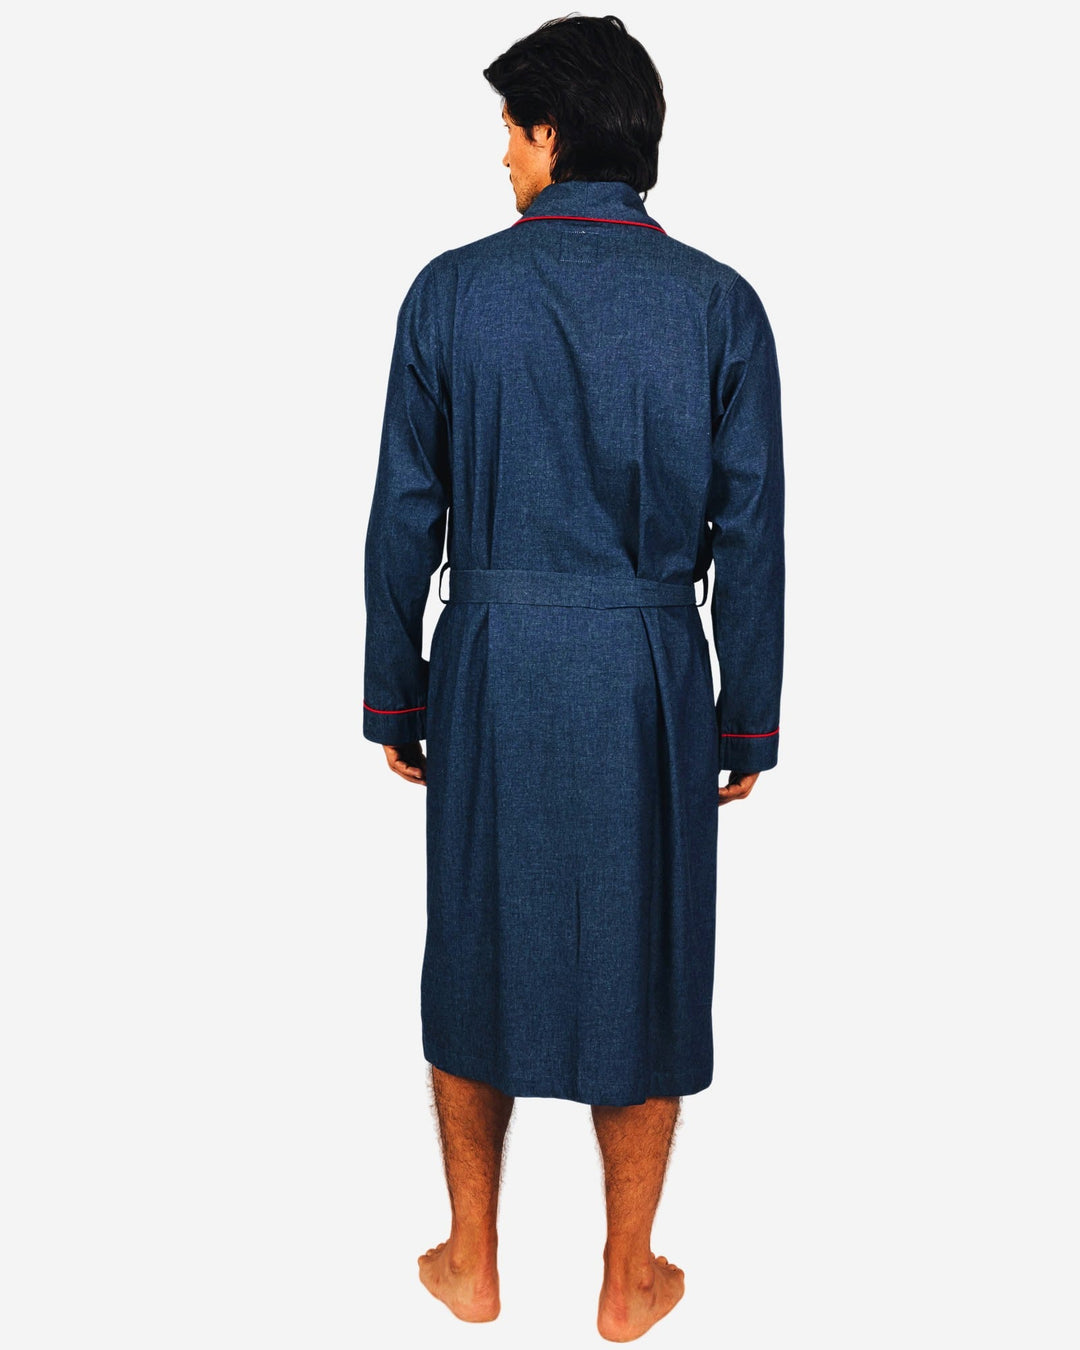 Mens dark blue dressing gown in denim